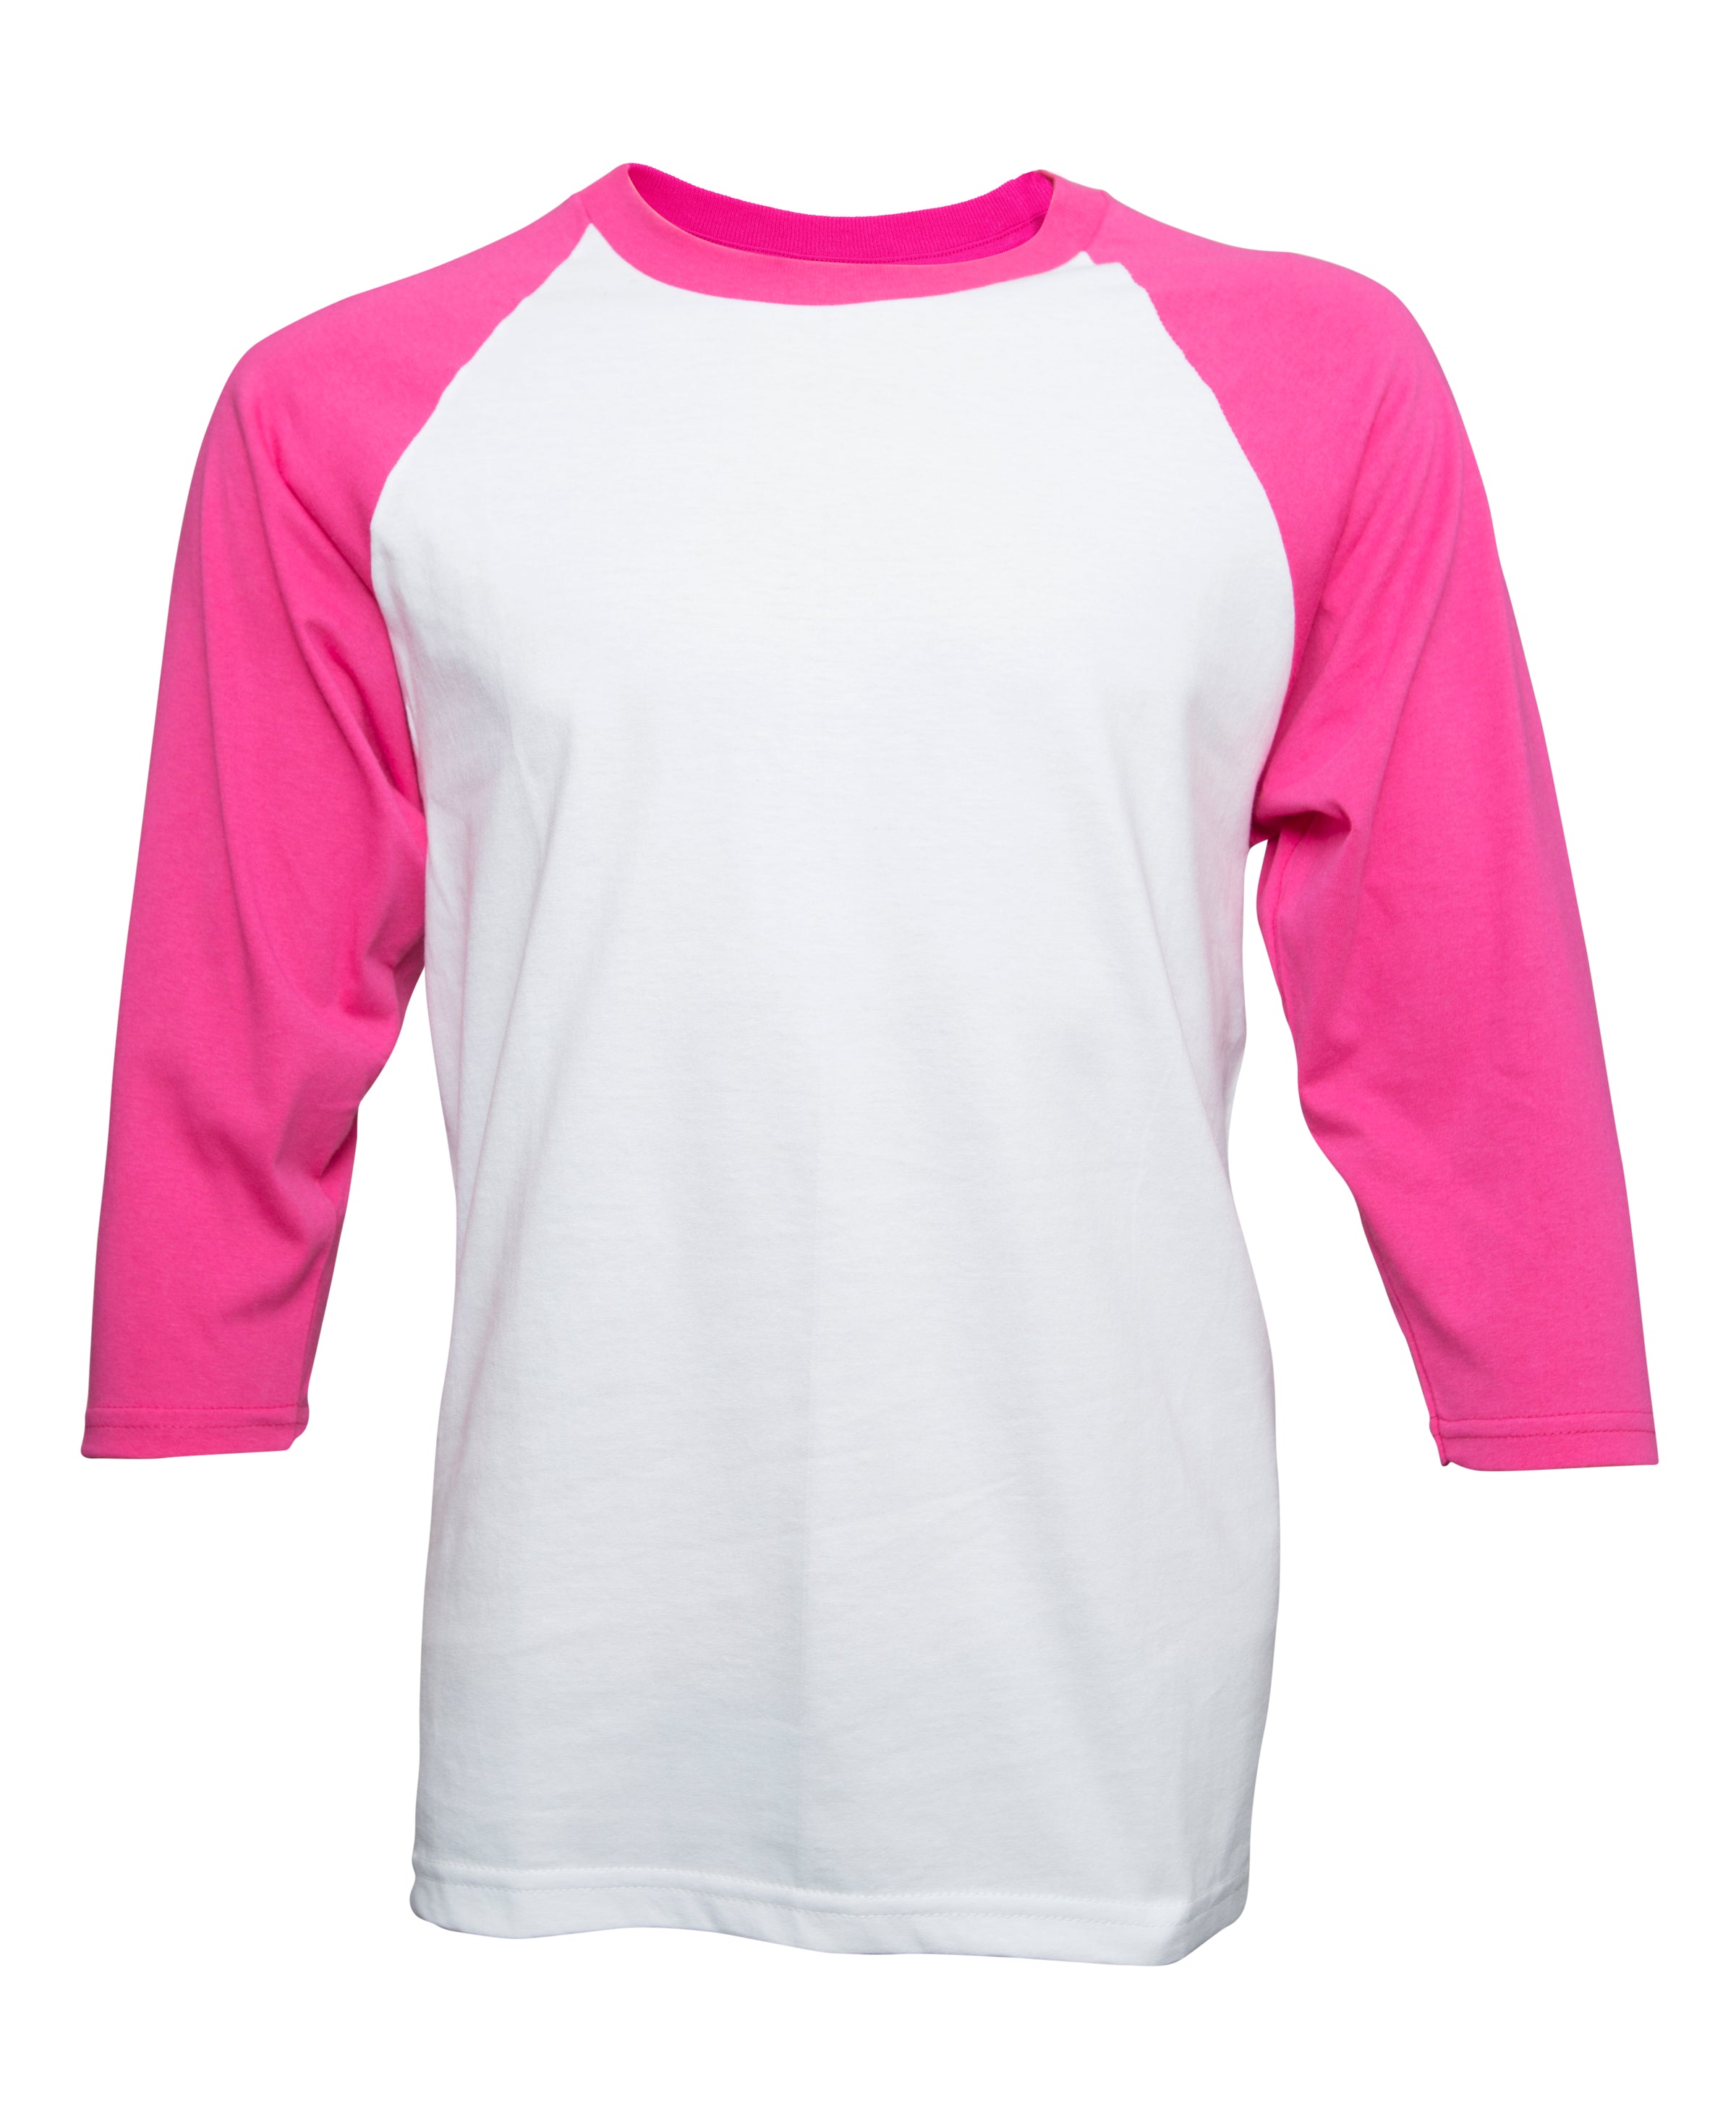 pink baseball t shirt